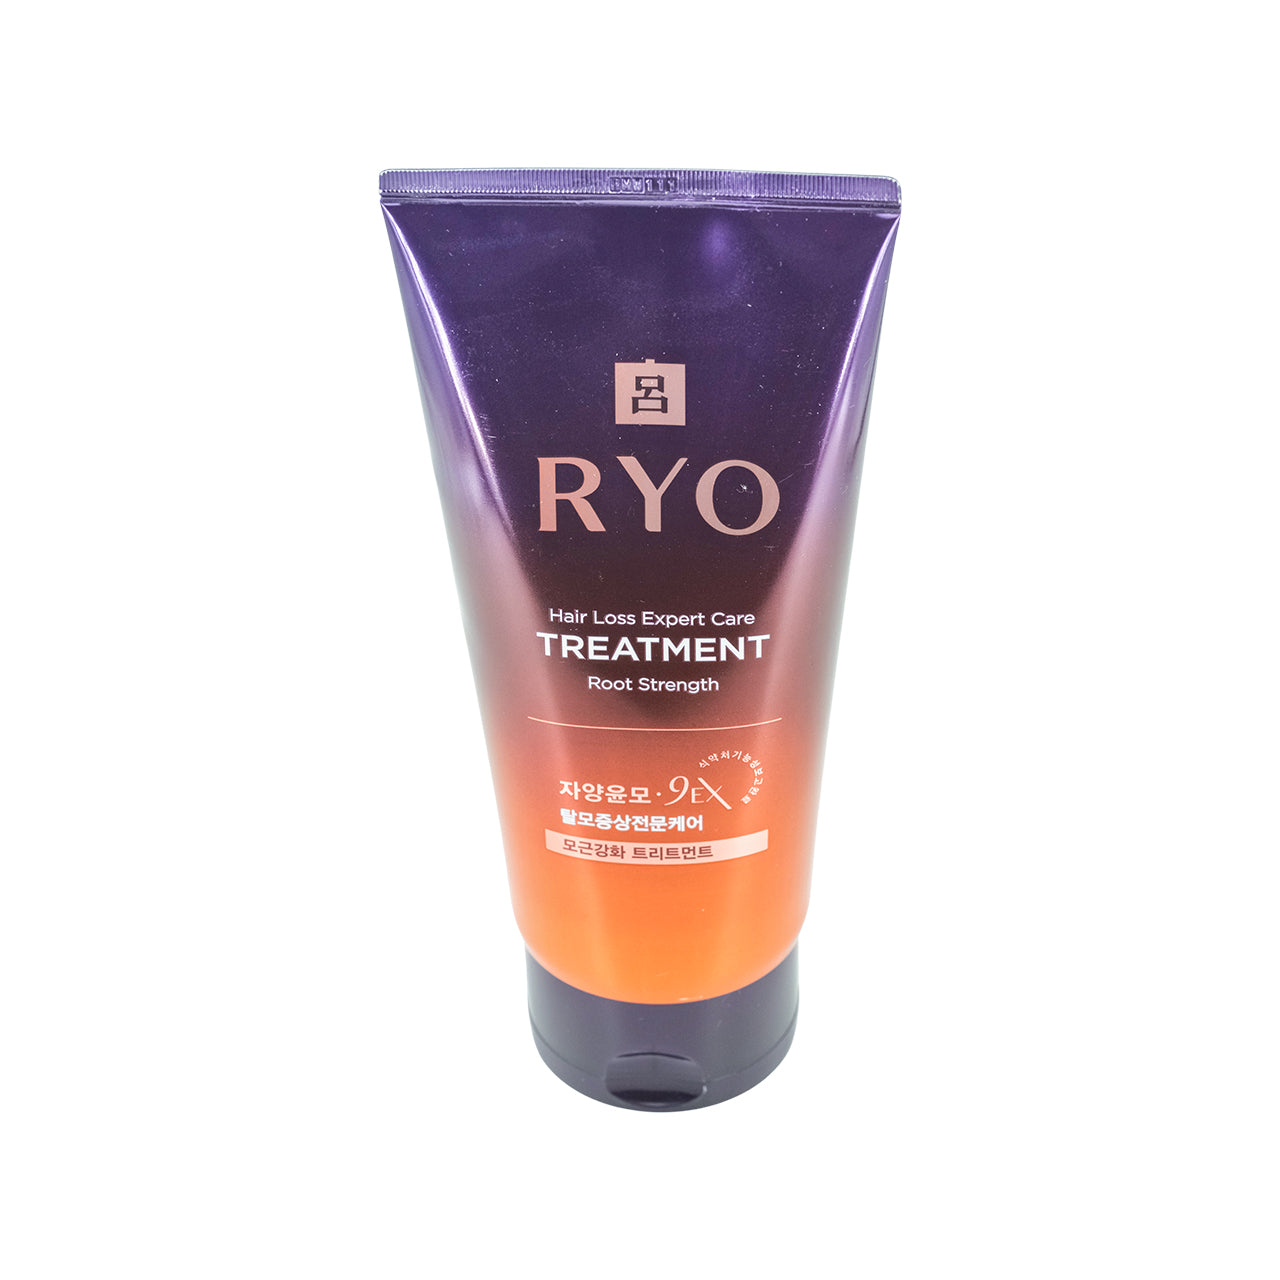 Ryo Hair Loss Care Treatment For Root Strength 330ml | Sasa Global eShop